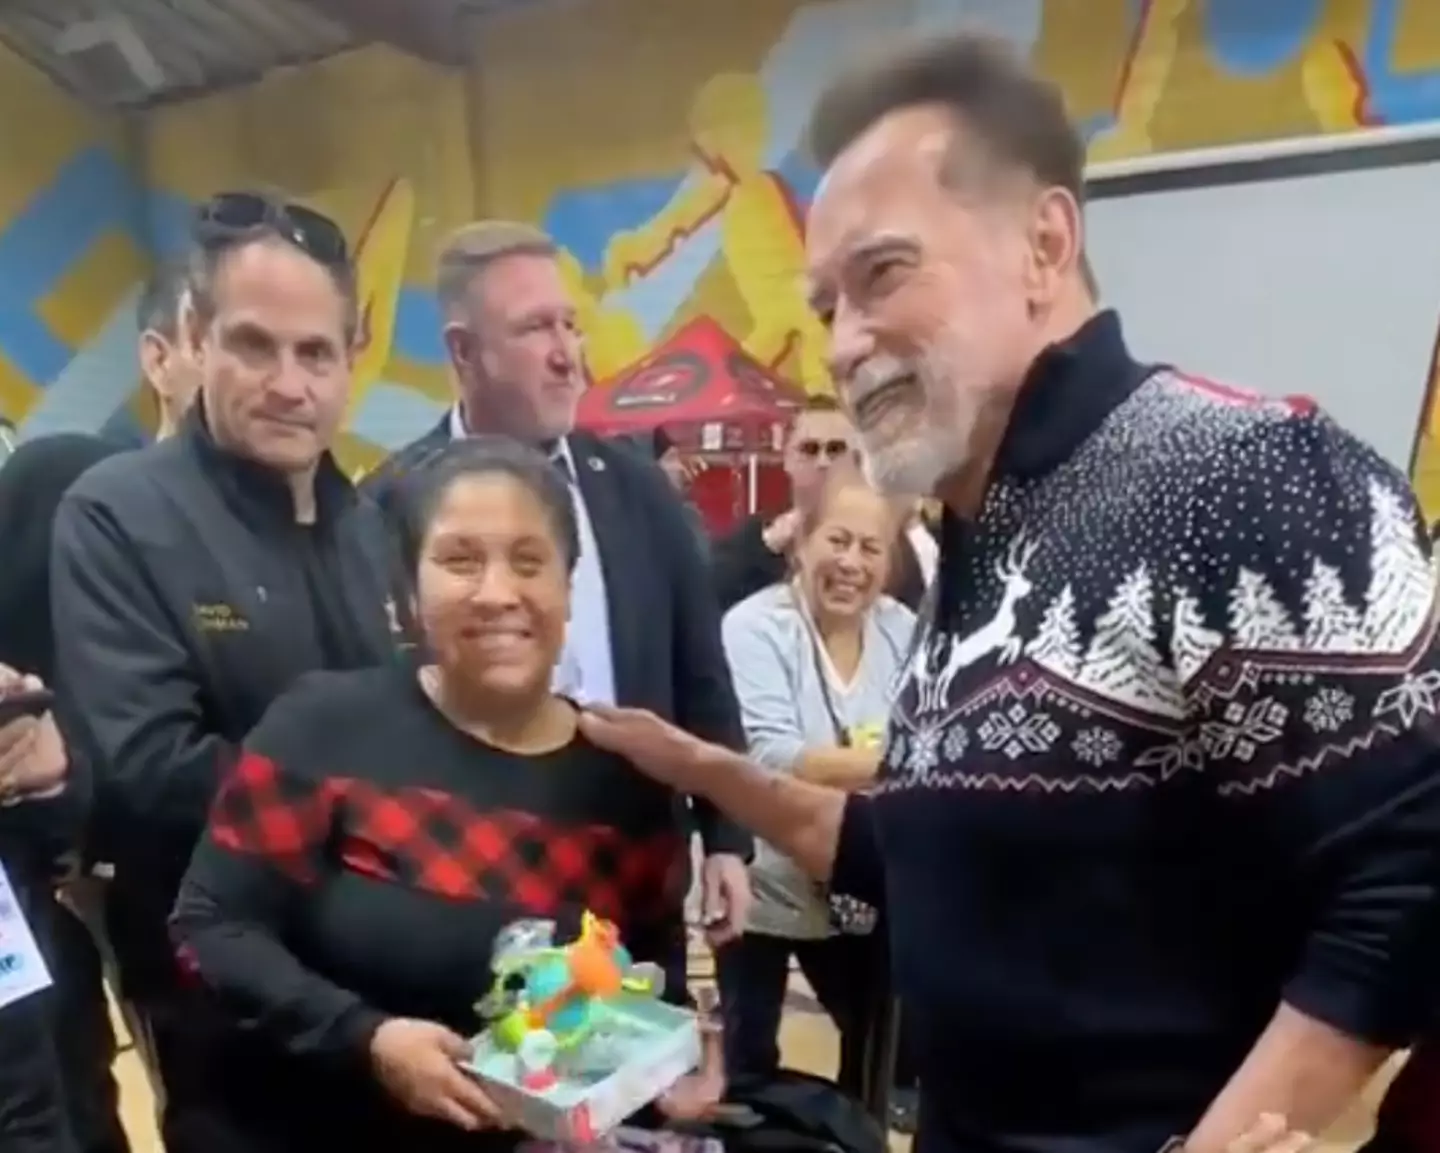 Social media users praised Schwarzeneggar for his generosity.